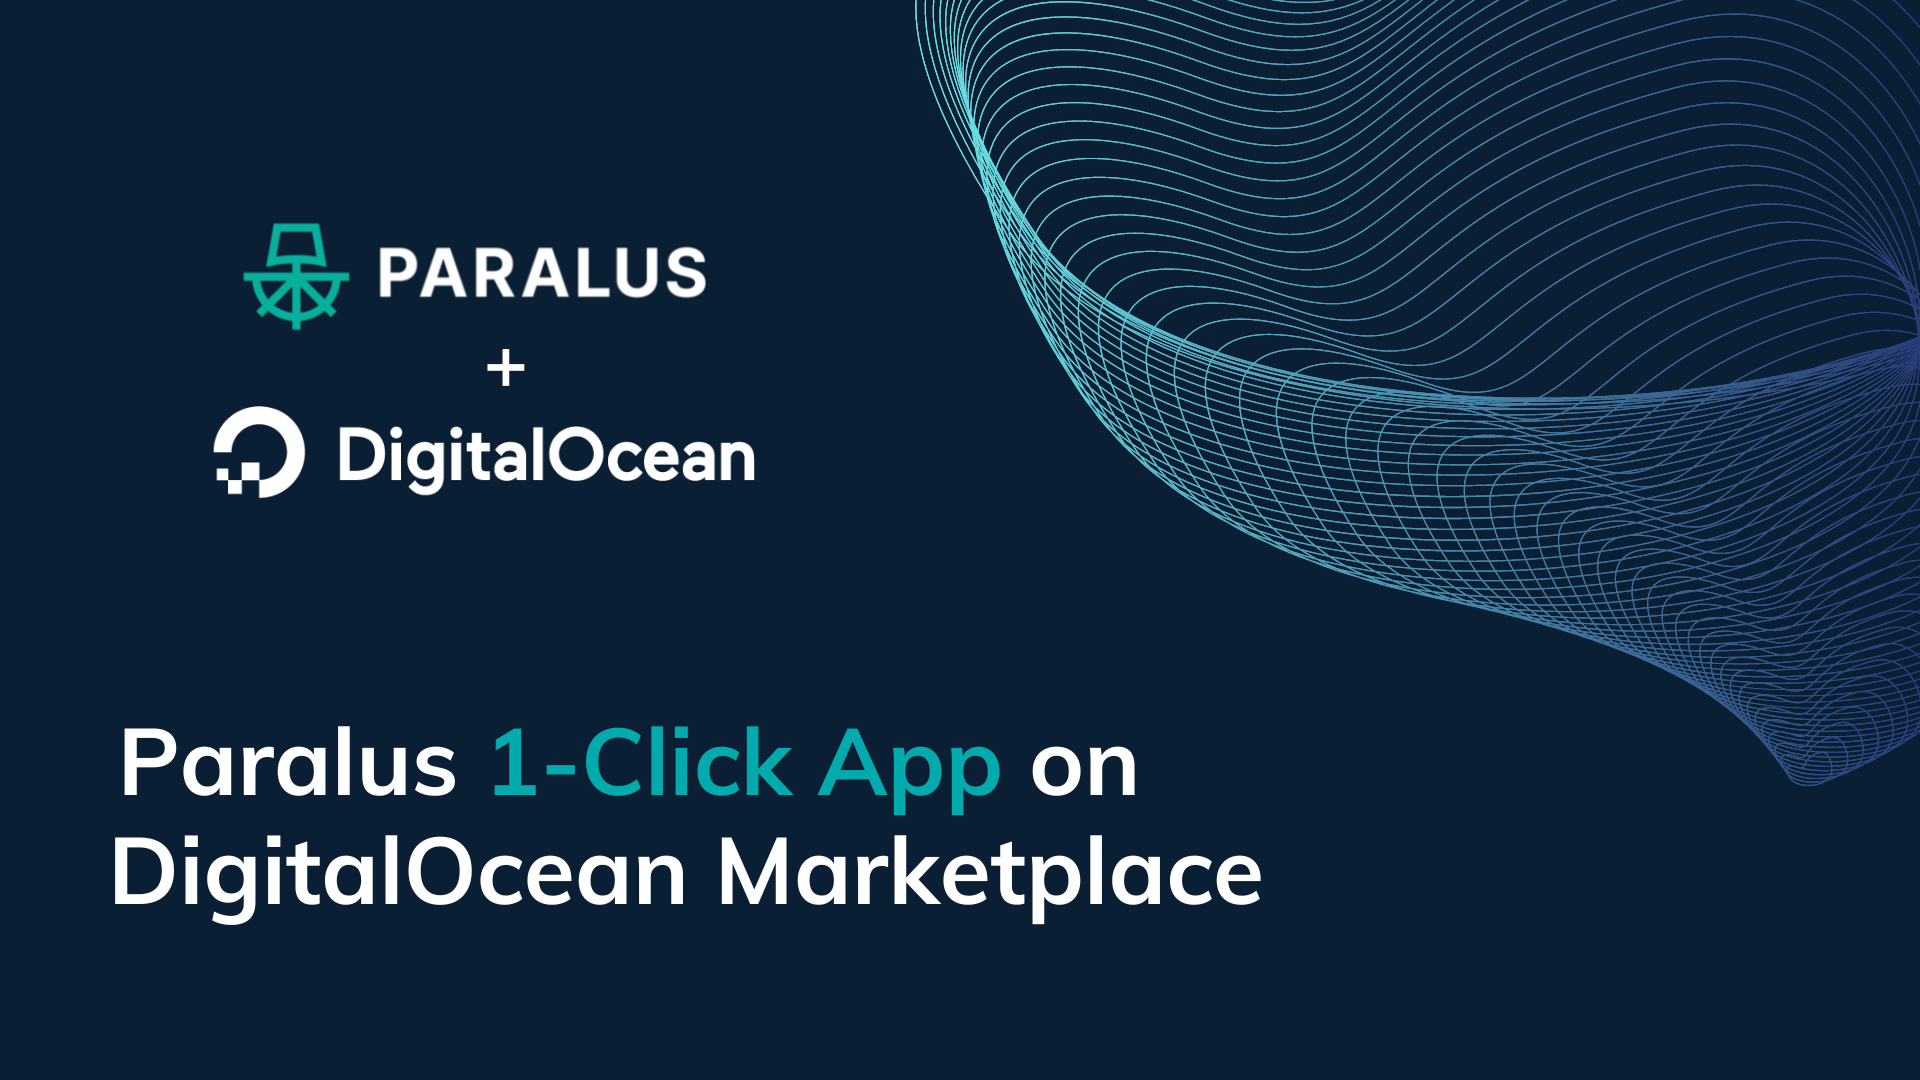 Launching Paralus 1-Click App on DigitalOcean Marketplace